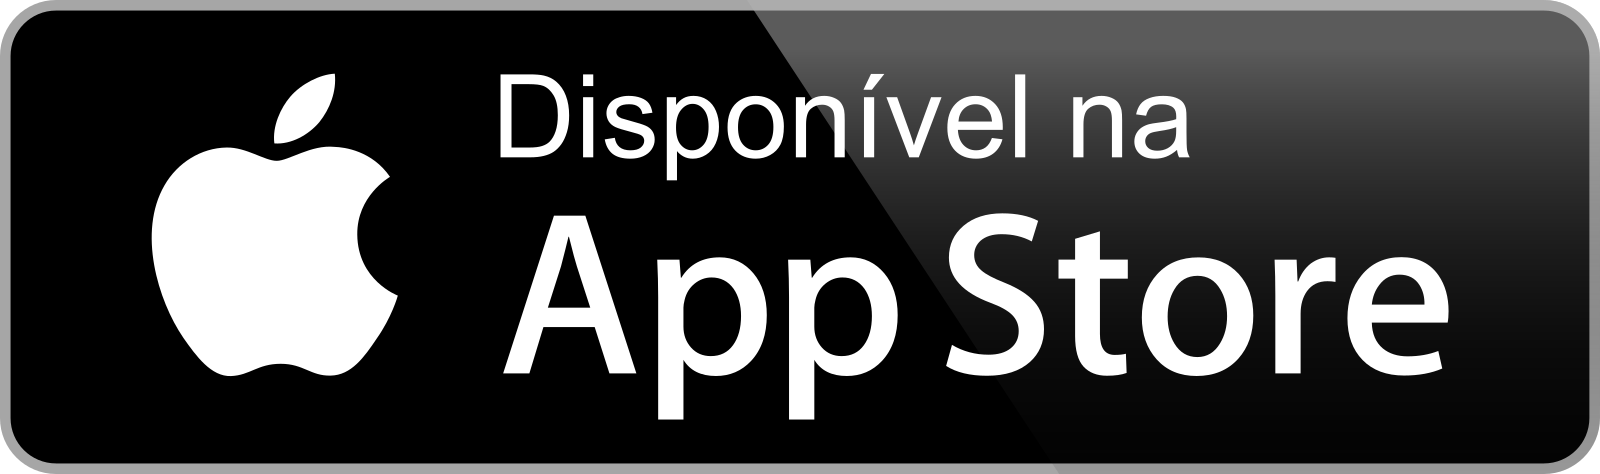 disponivel-na-app-store-botao-3